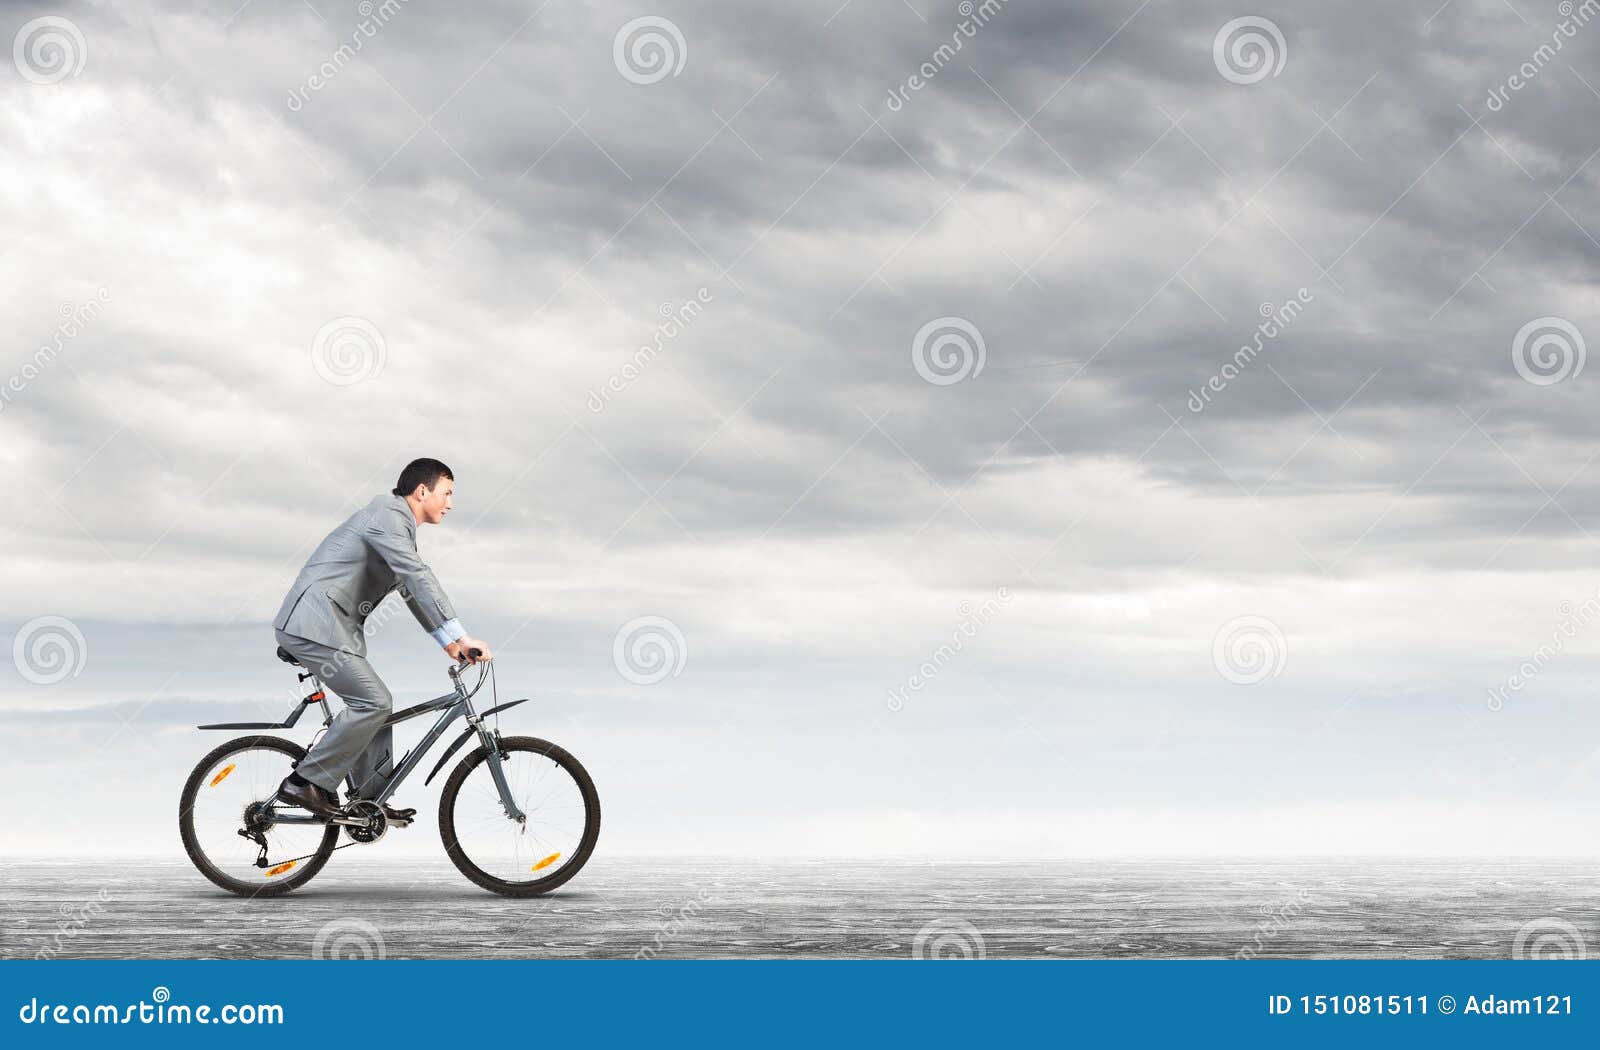 forråde baggrund kilometer Businessman Commuting To Work by Bike Stock Image - Image of outdoors,  bike: 151081511